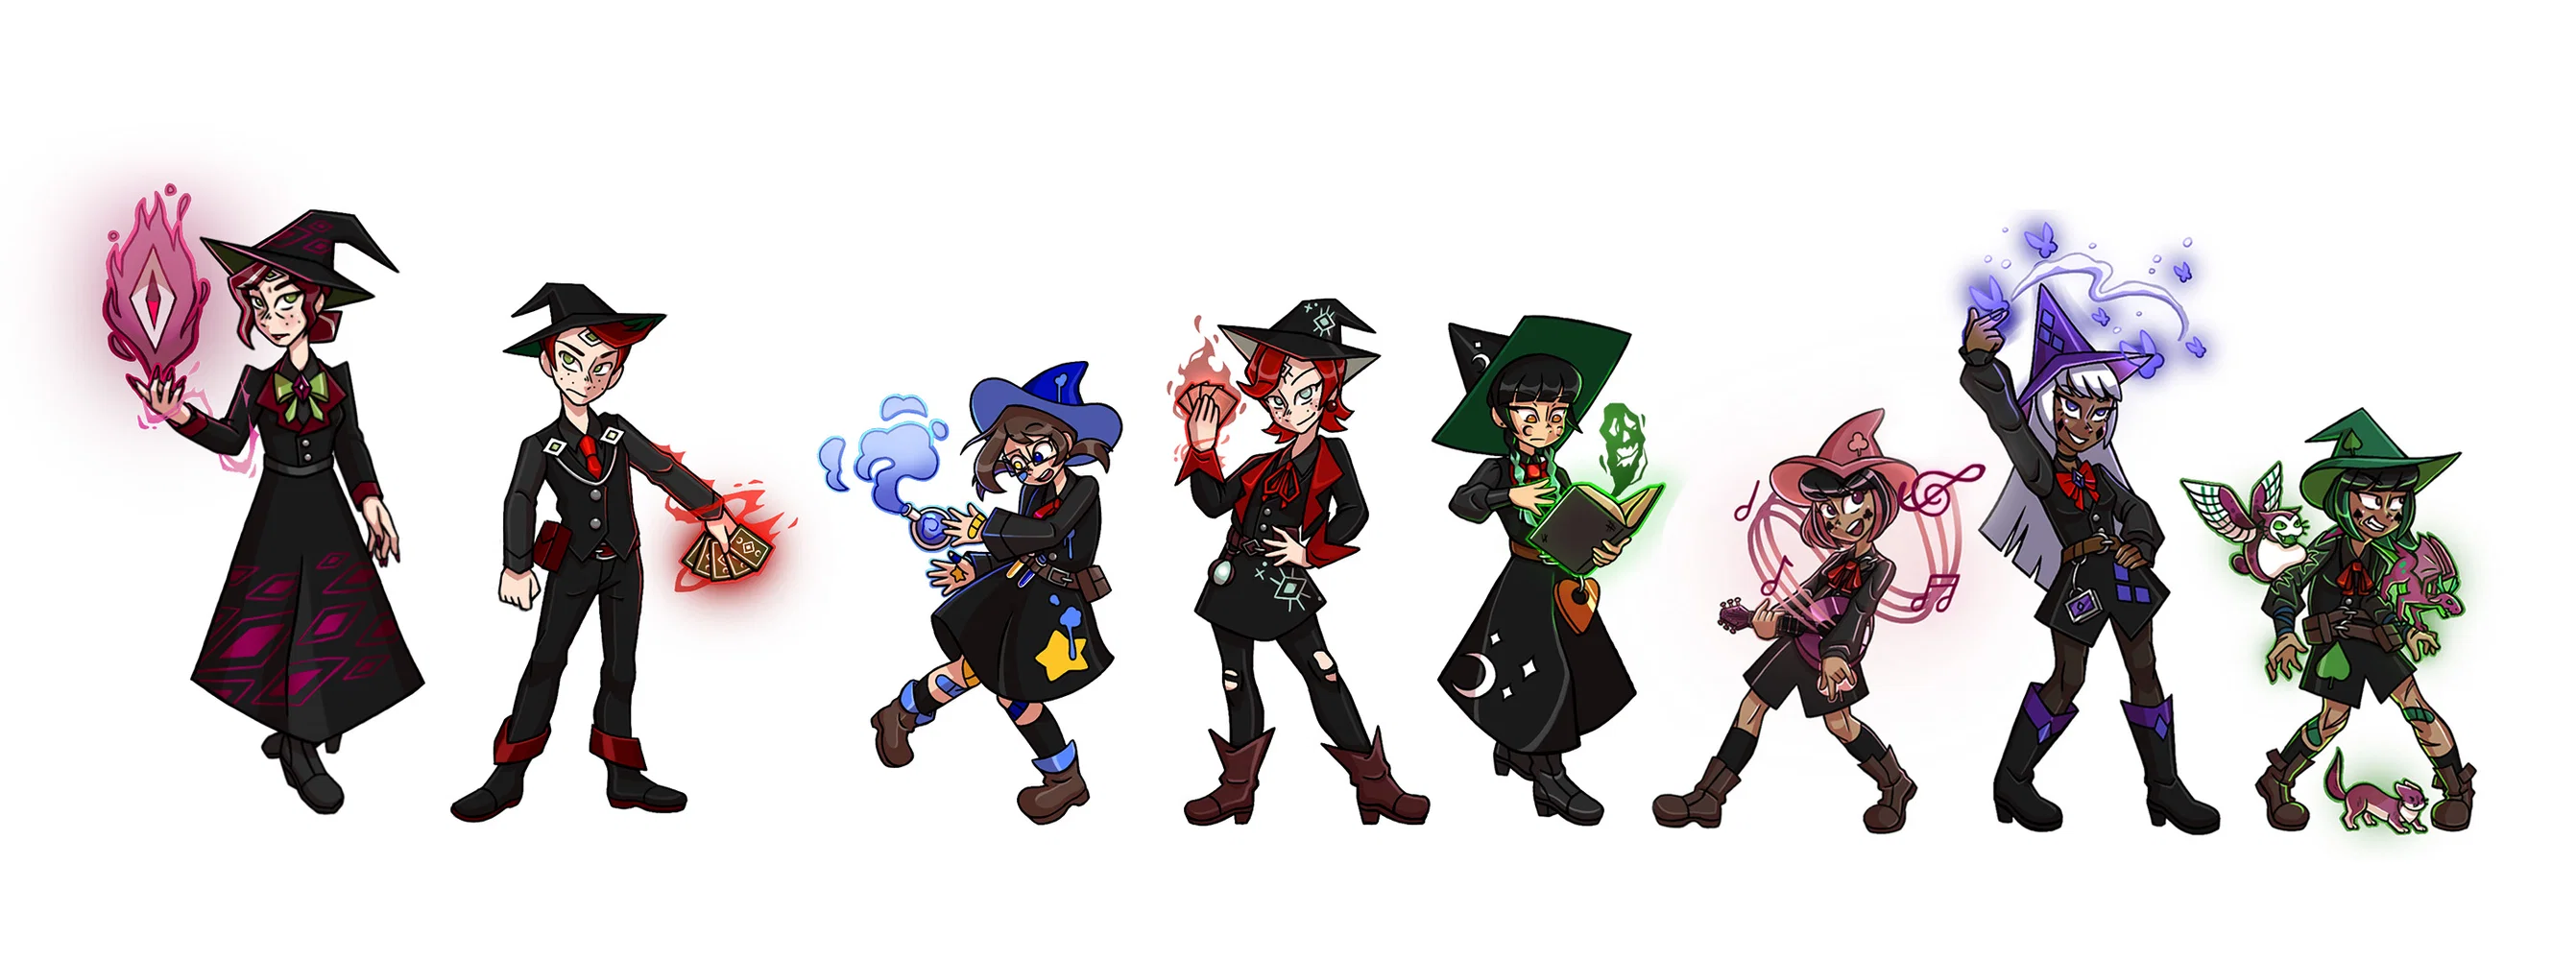 Character lineup of original characters.